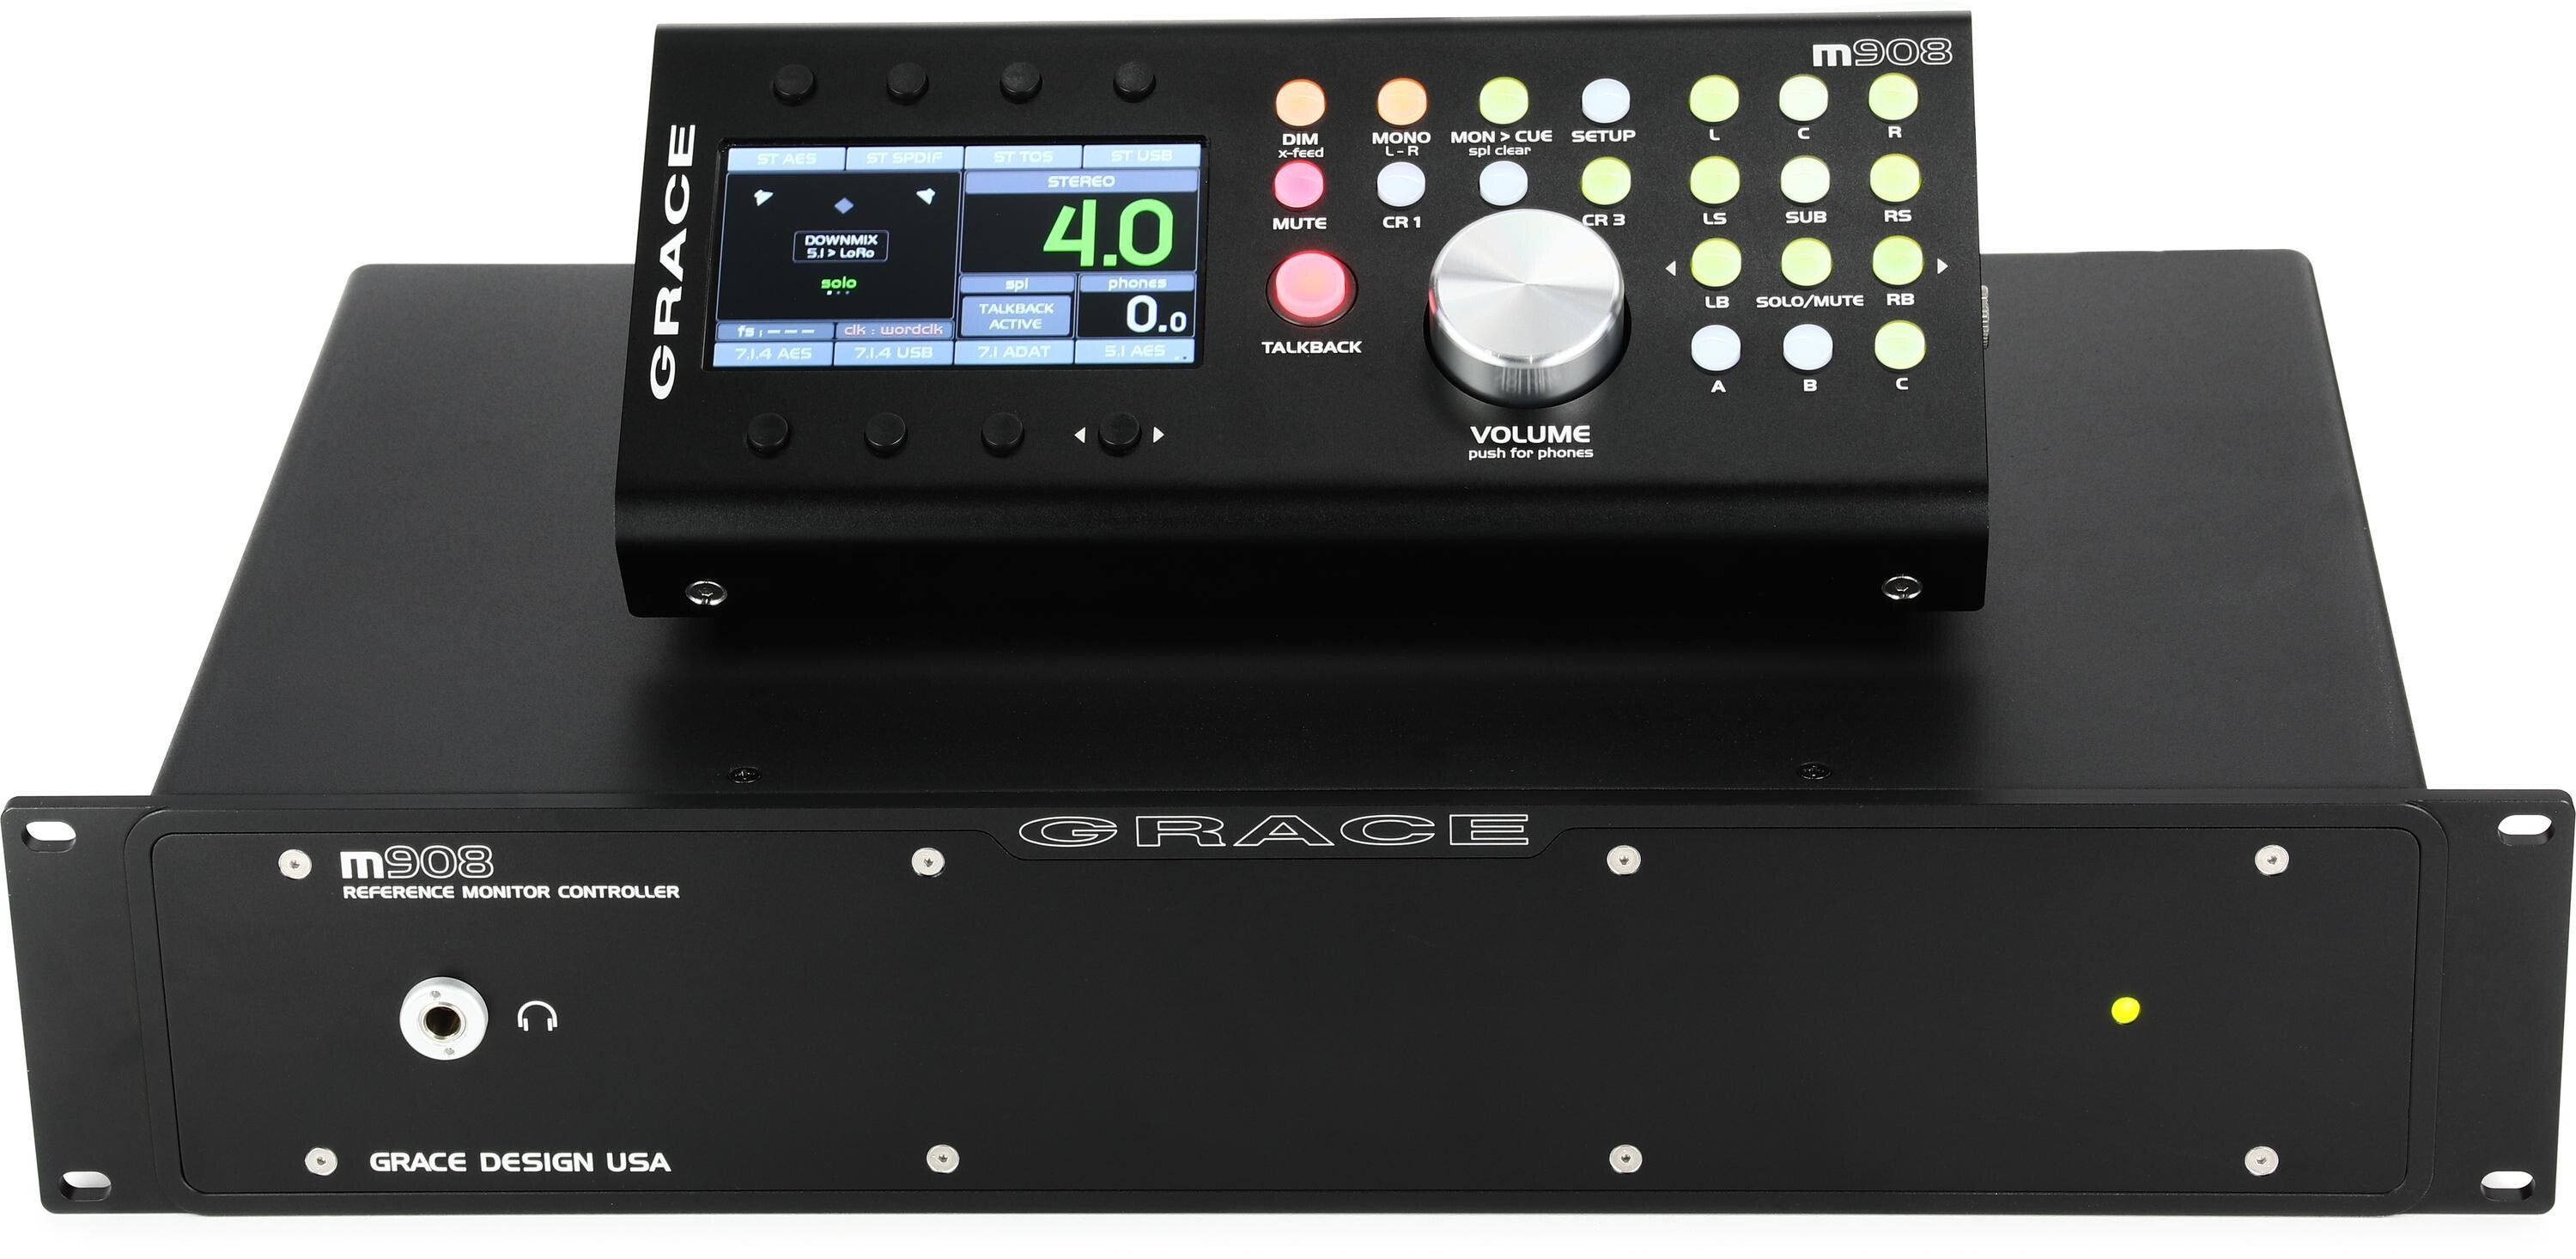 Grace Design m908 Surround Monitor Controller